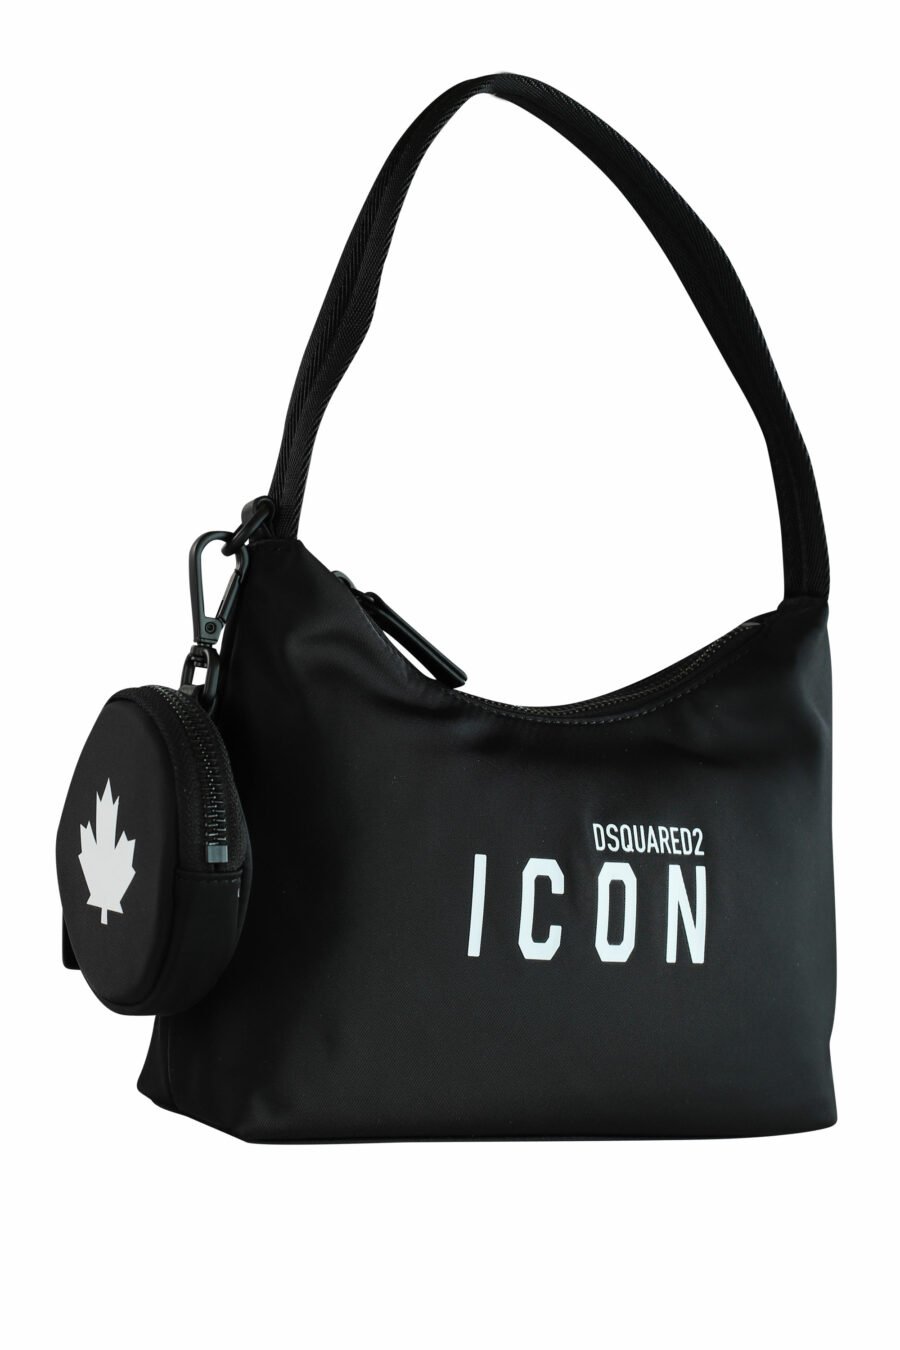 Bolso bandolero negro estilo hobo con logo "icon" - IMG 1245